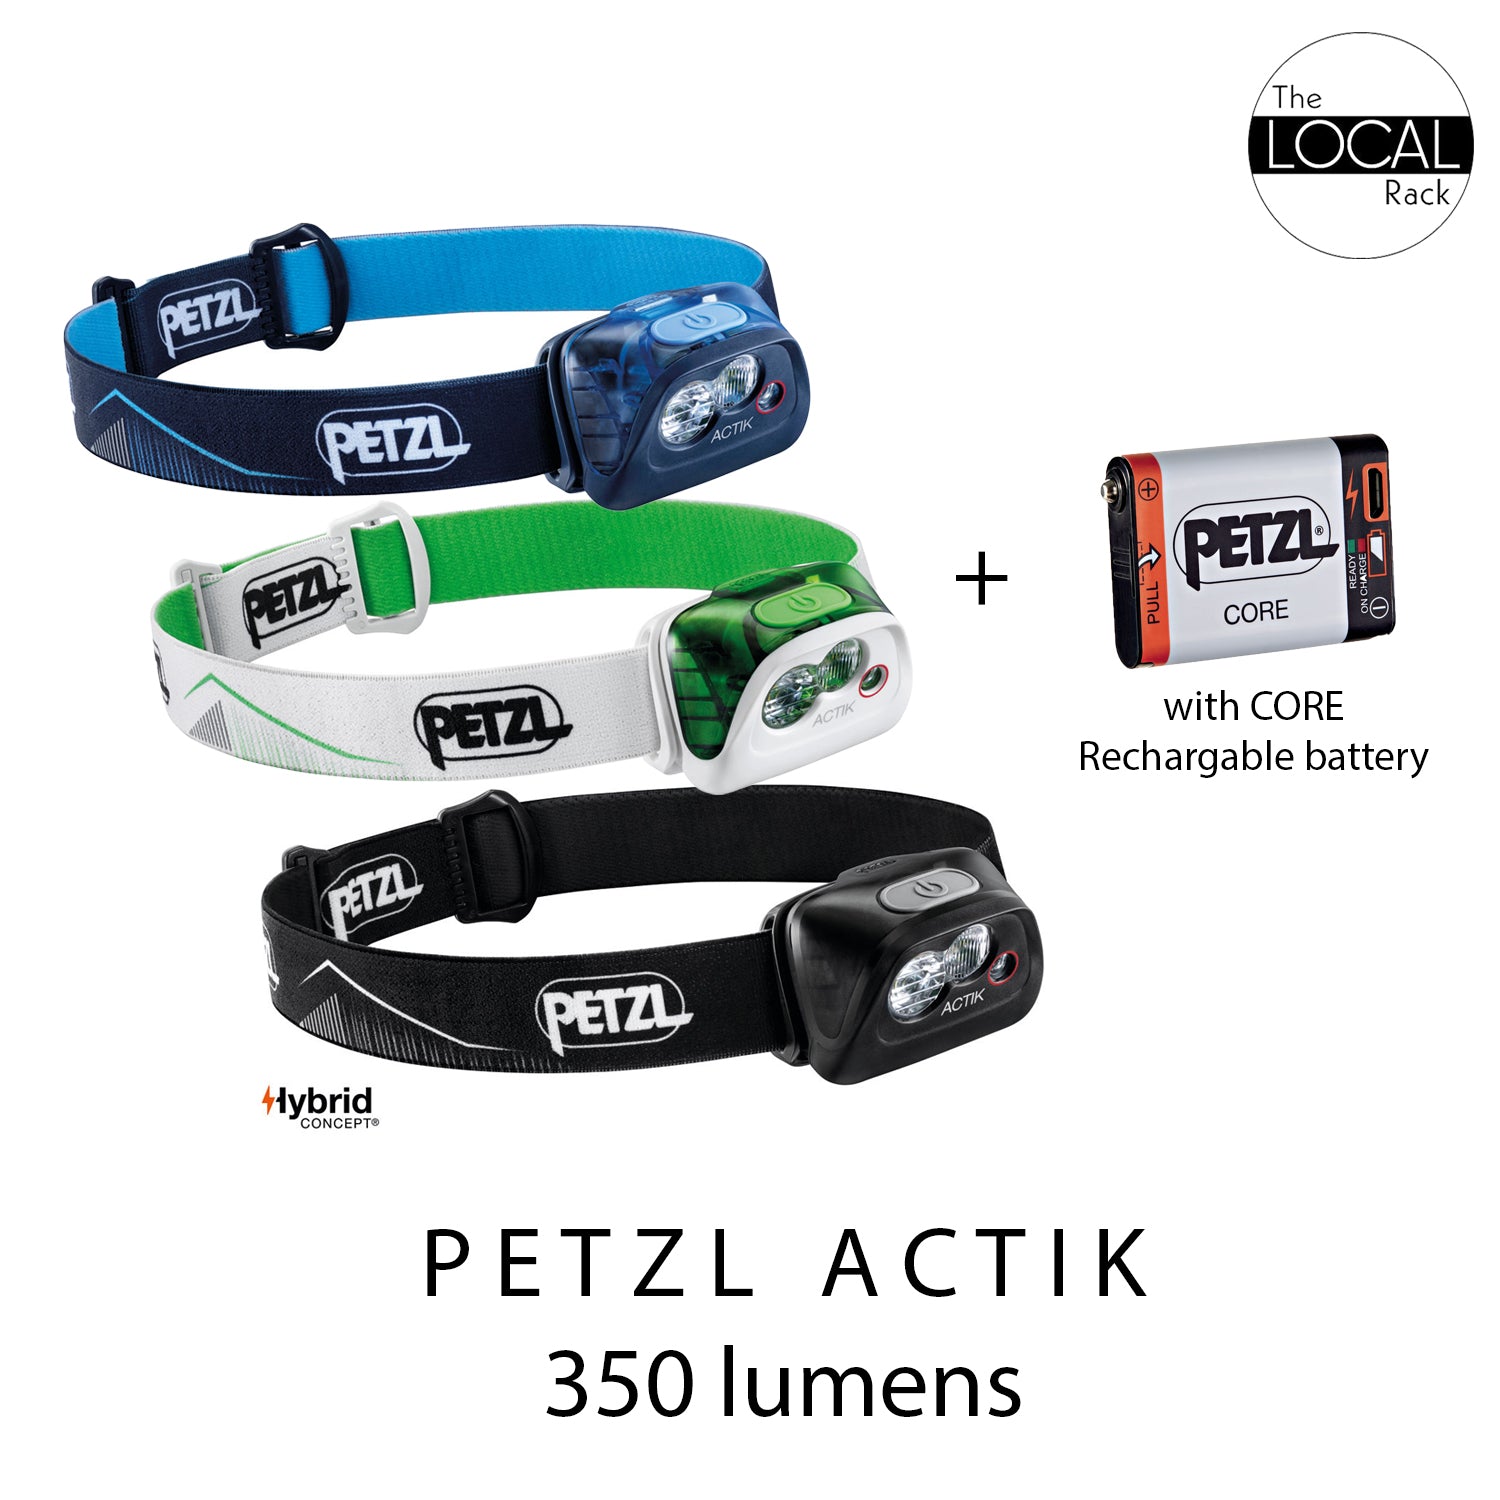 Petzl ACTIK CORE Rechargeable Headlamp 350 lumens